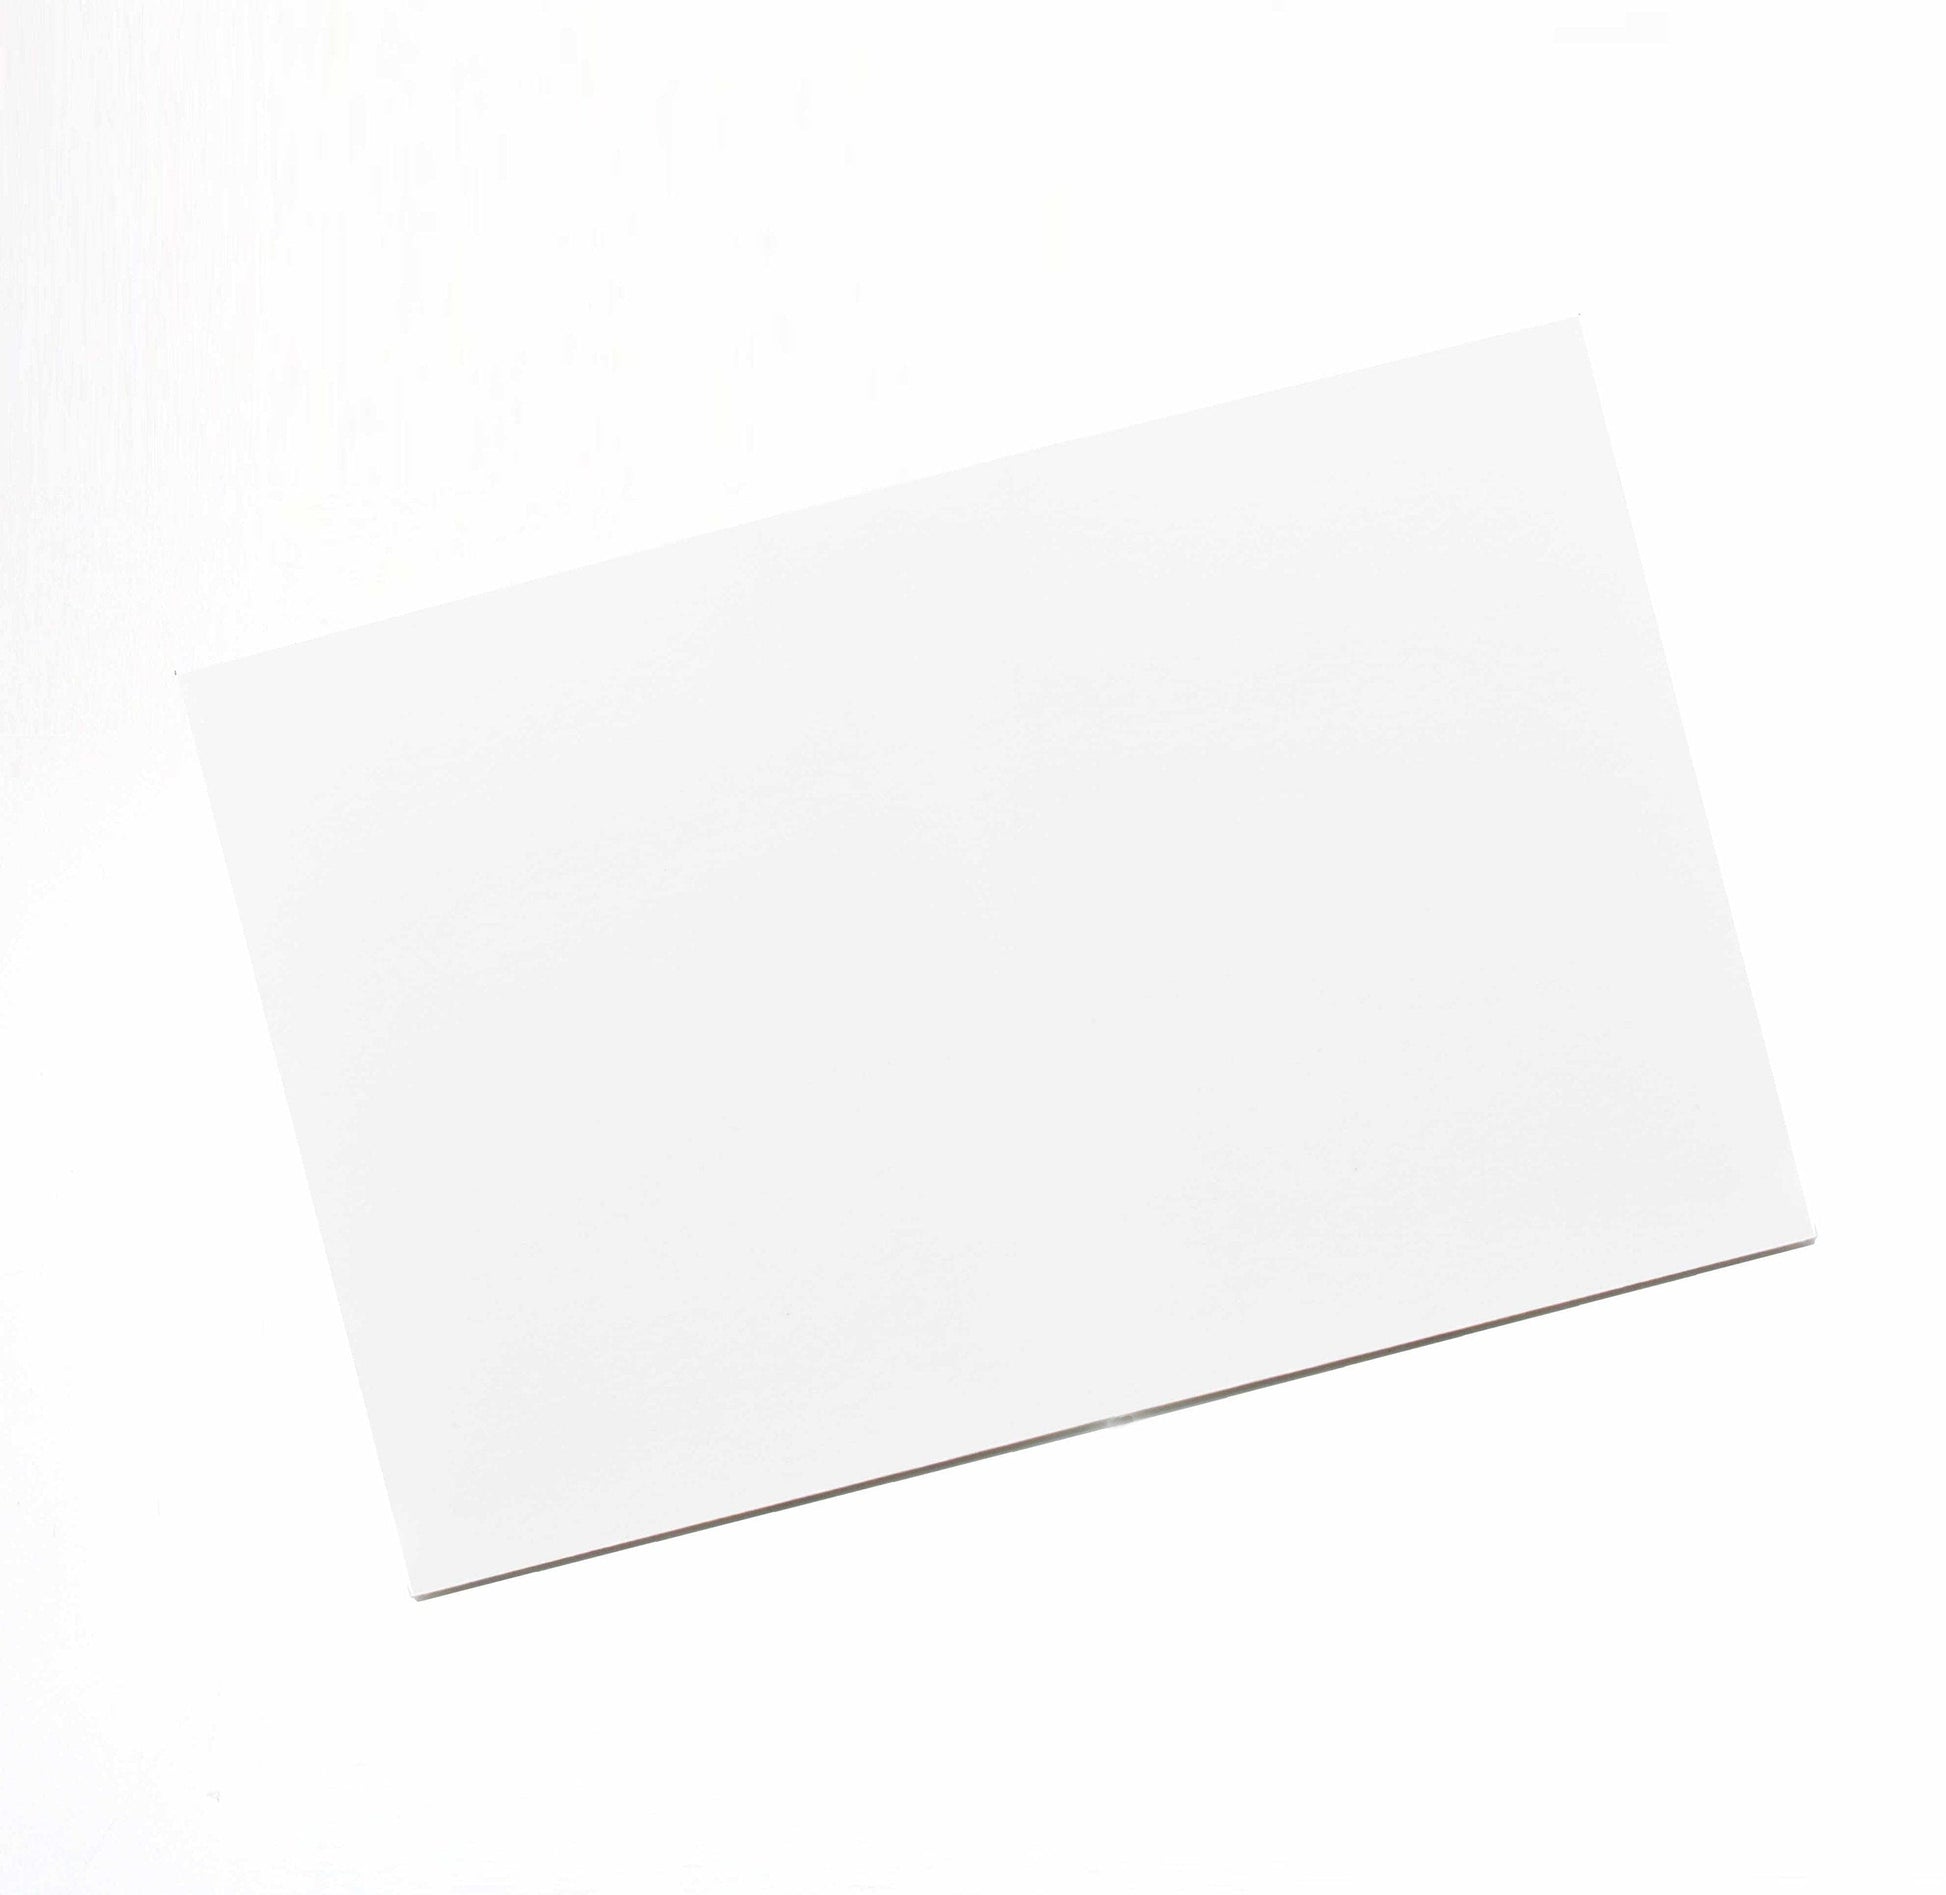 PinkPolish Design Note Cards "Shiny Things" Handmade Notecard